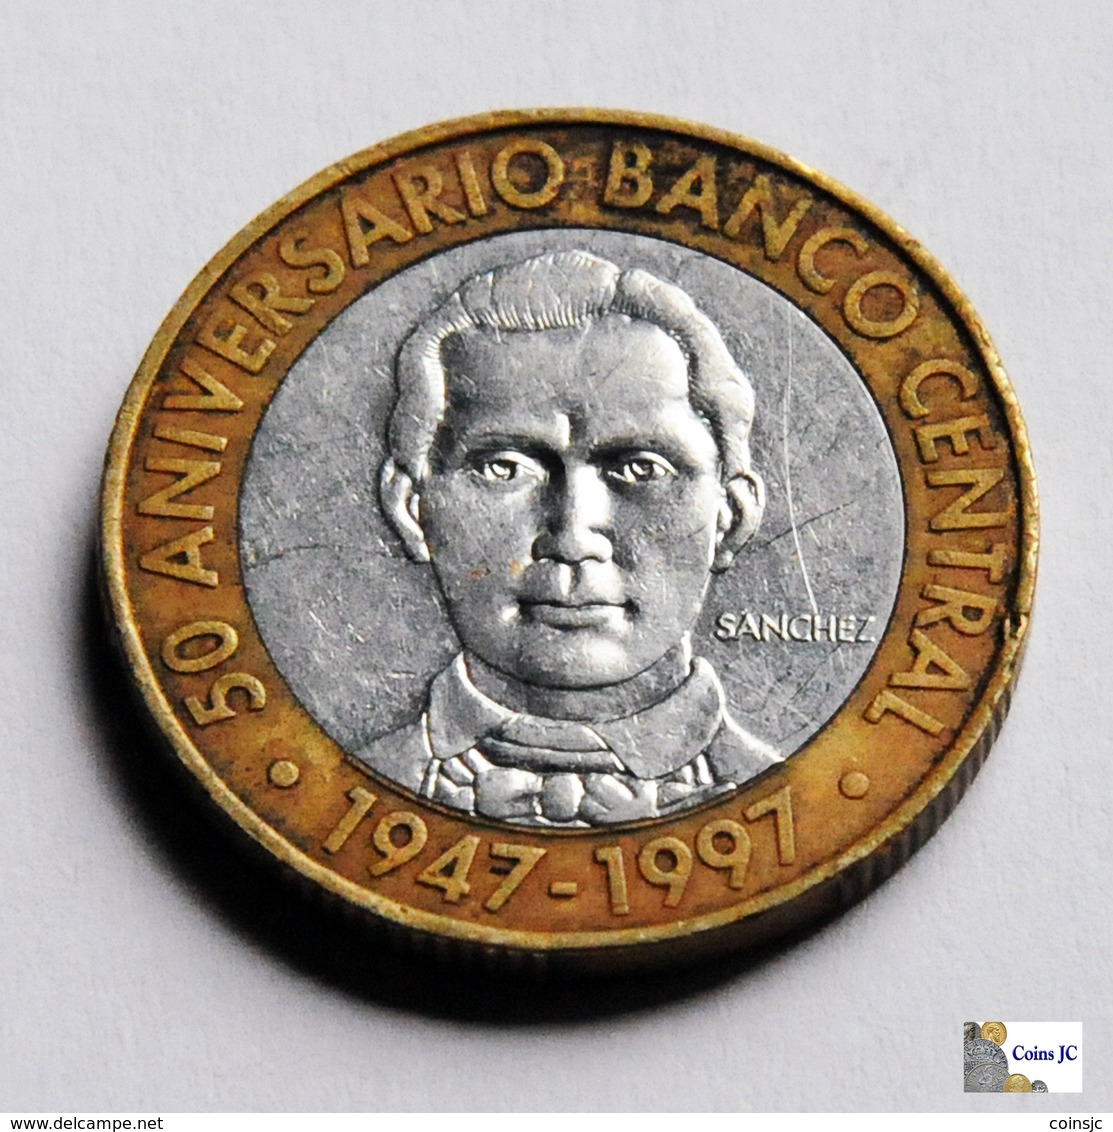 Dominican Republic - 5 Pesos - 1997 - Dominicaanse Republiek